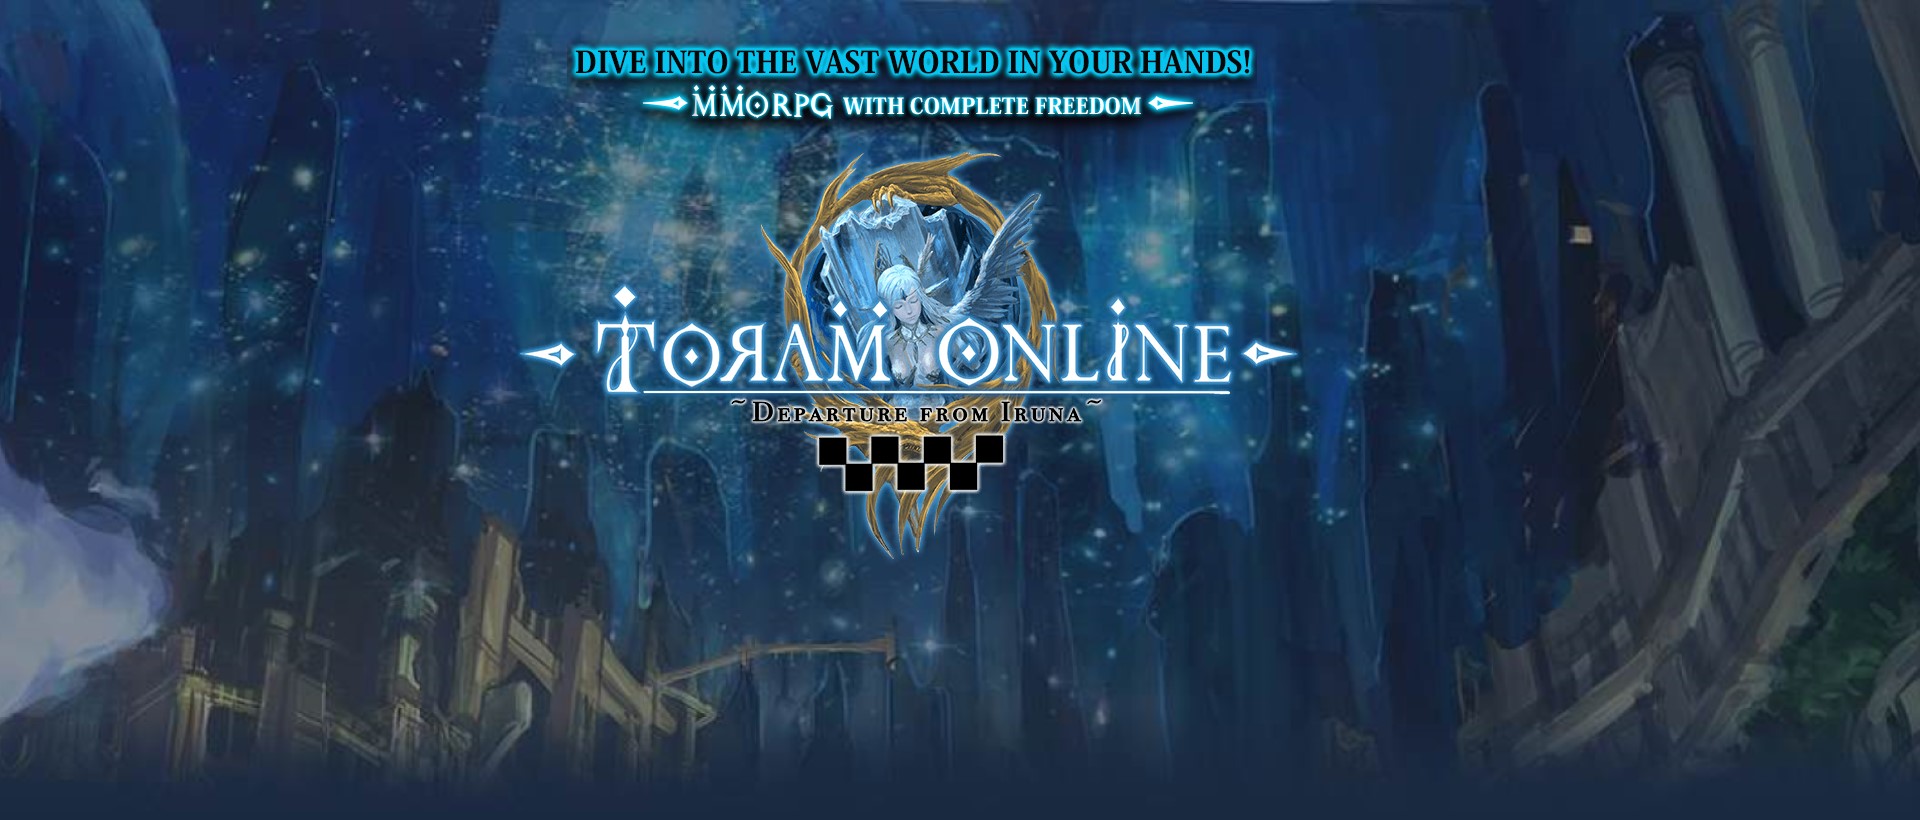 RPG Toram Online - MMORPG - Apps on Google Play